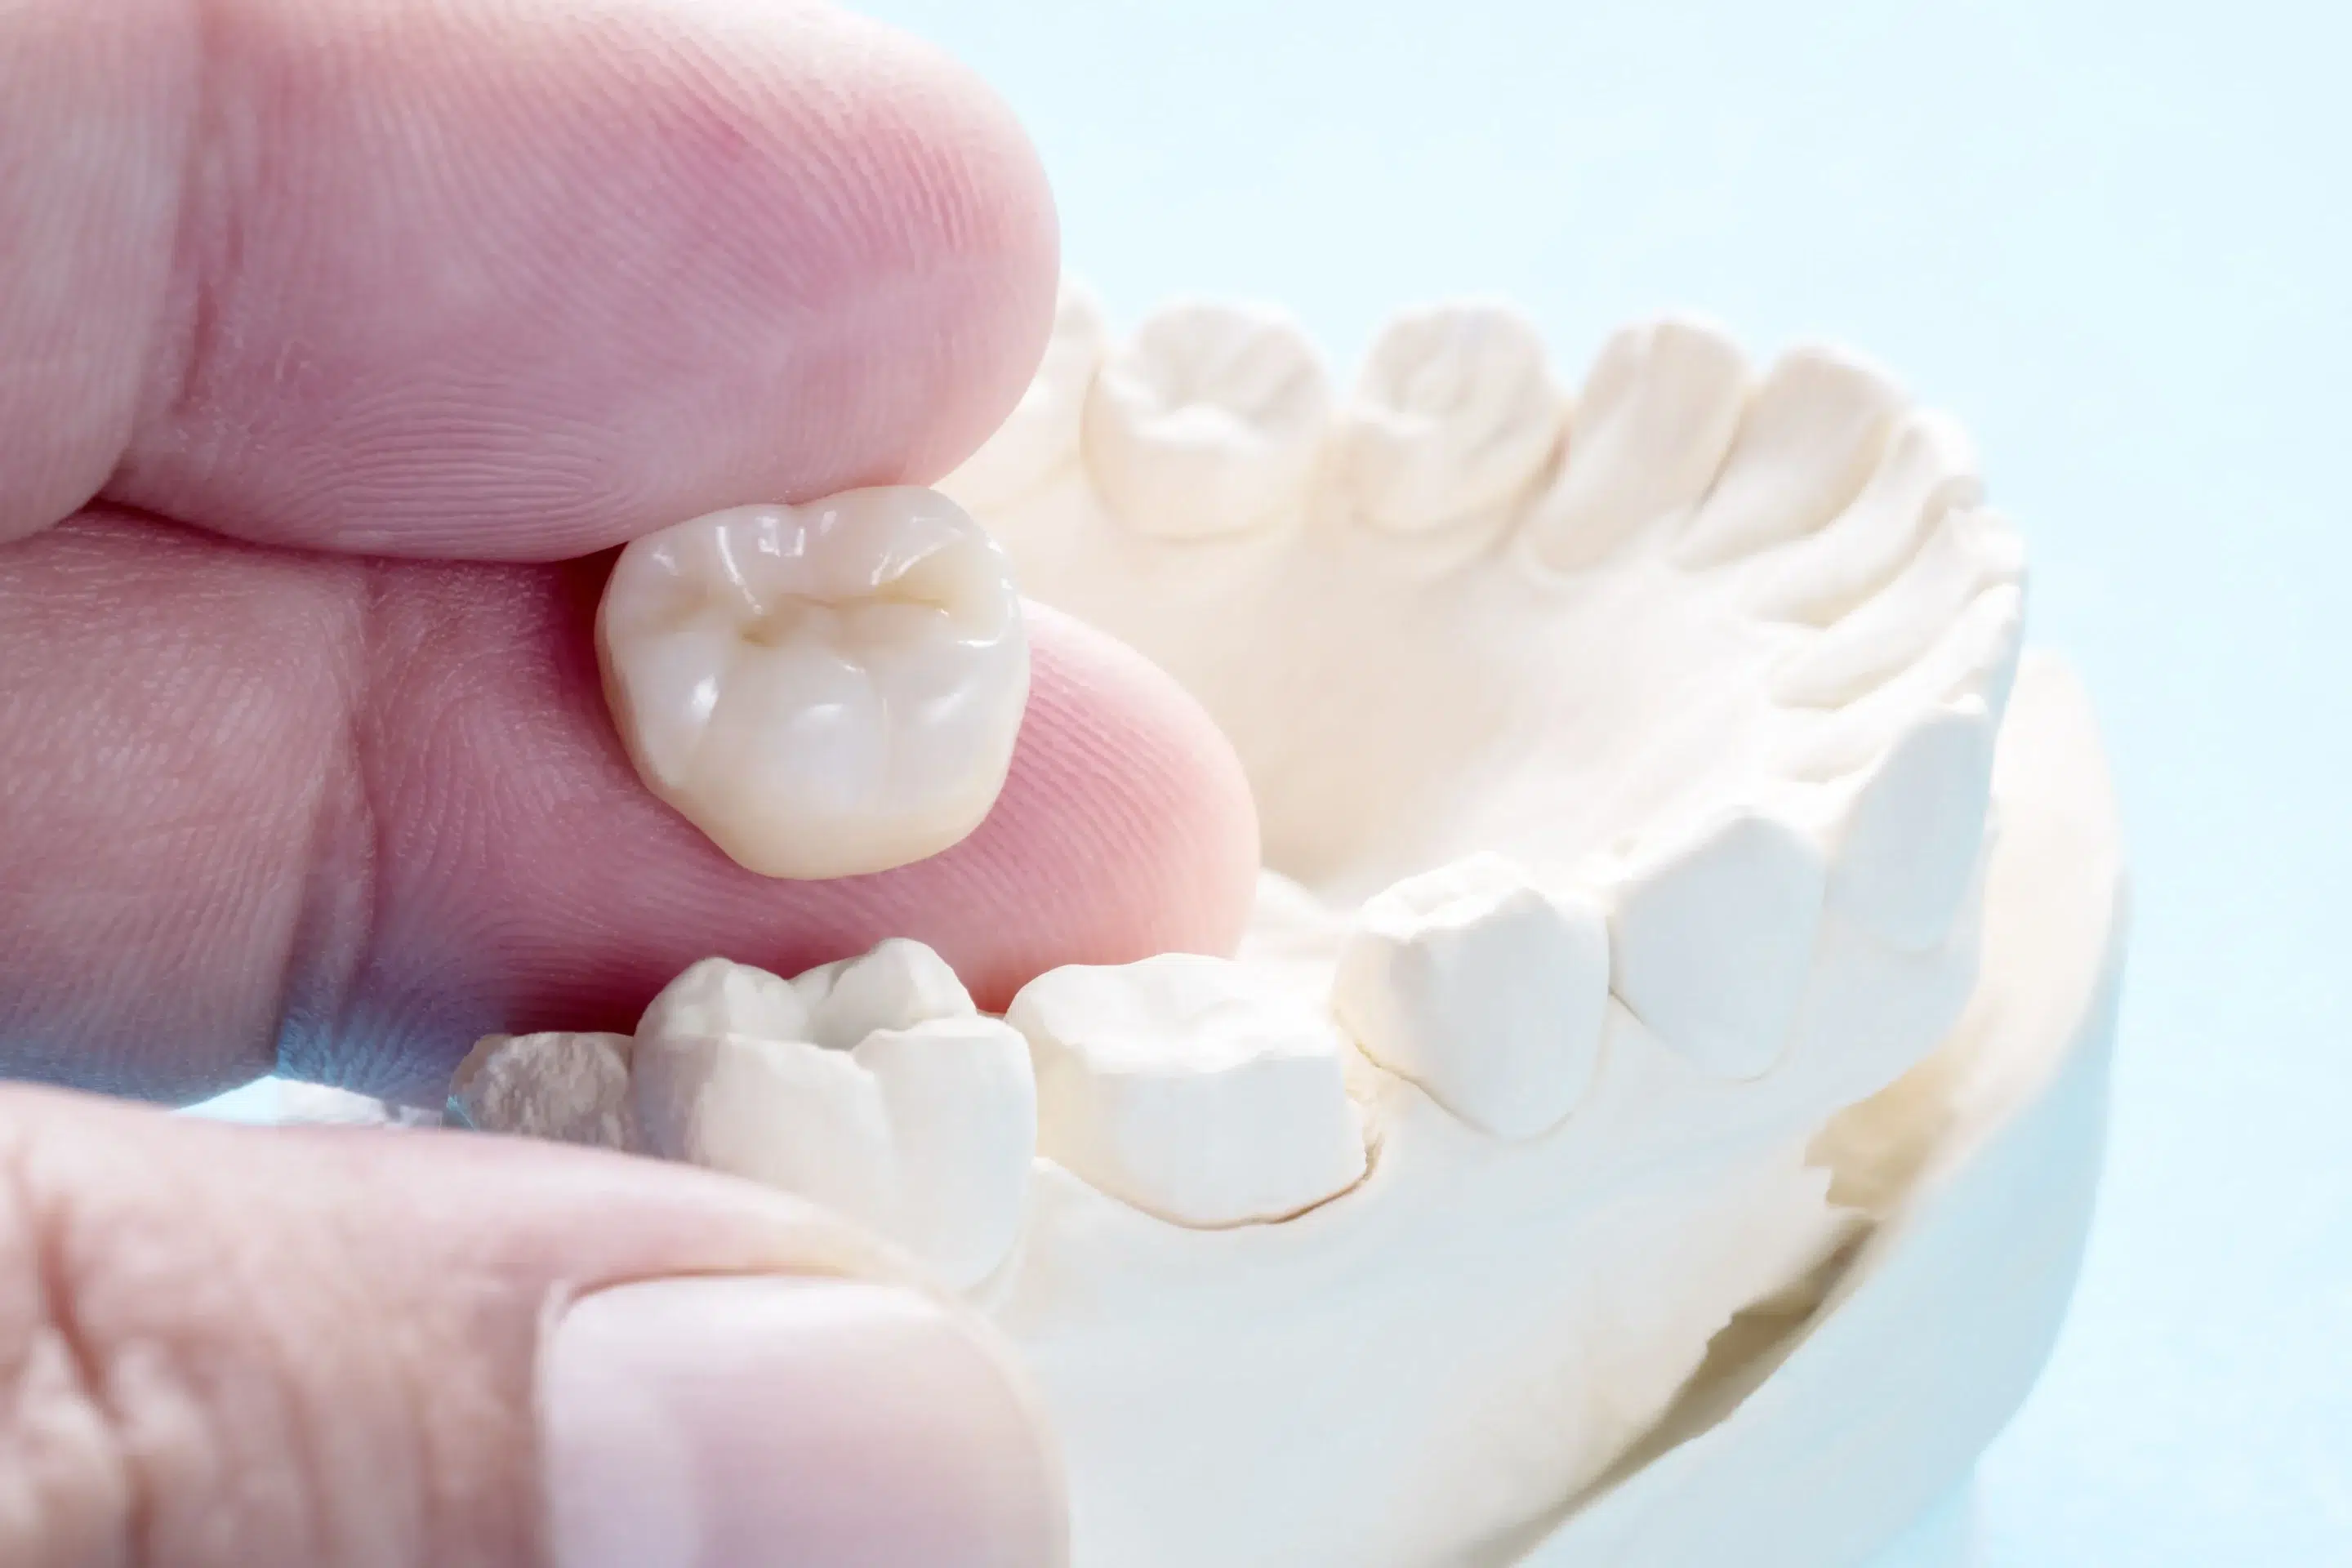 coronas dentales que son clinica dental en logroño riojadental estetica dental implantologia